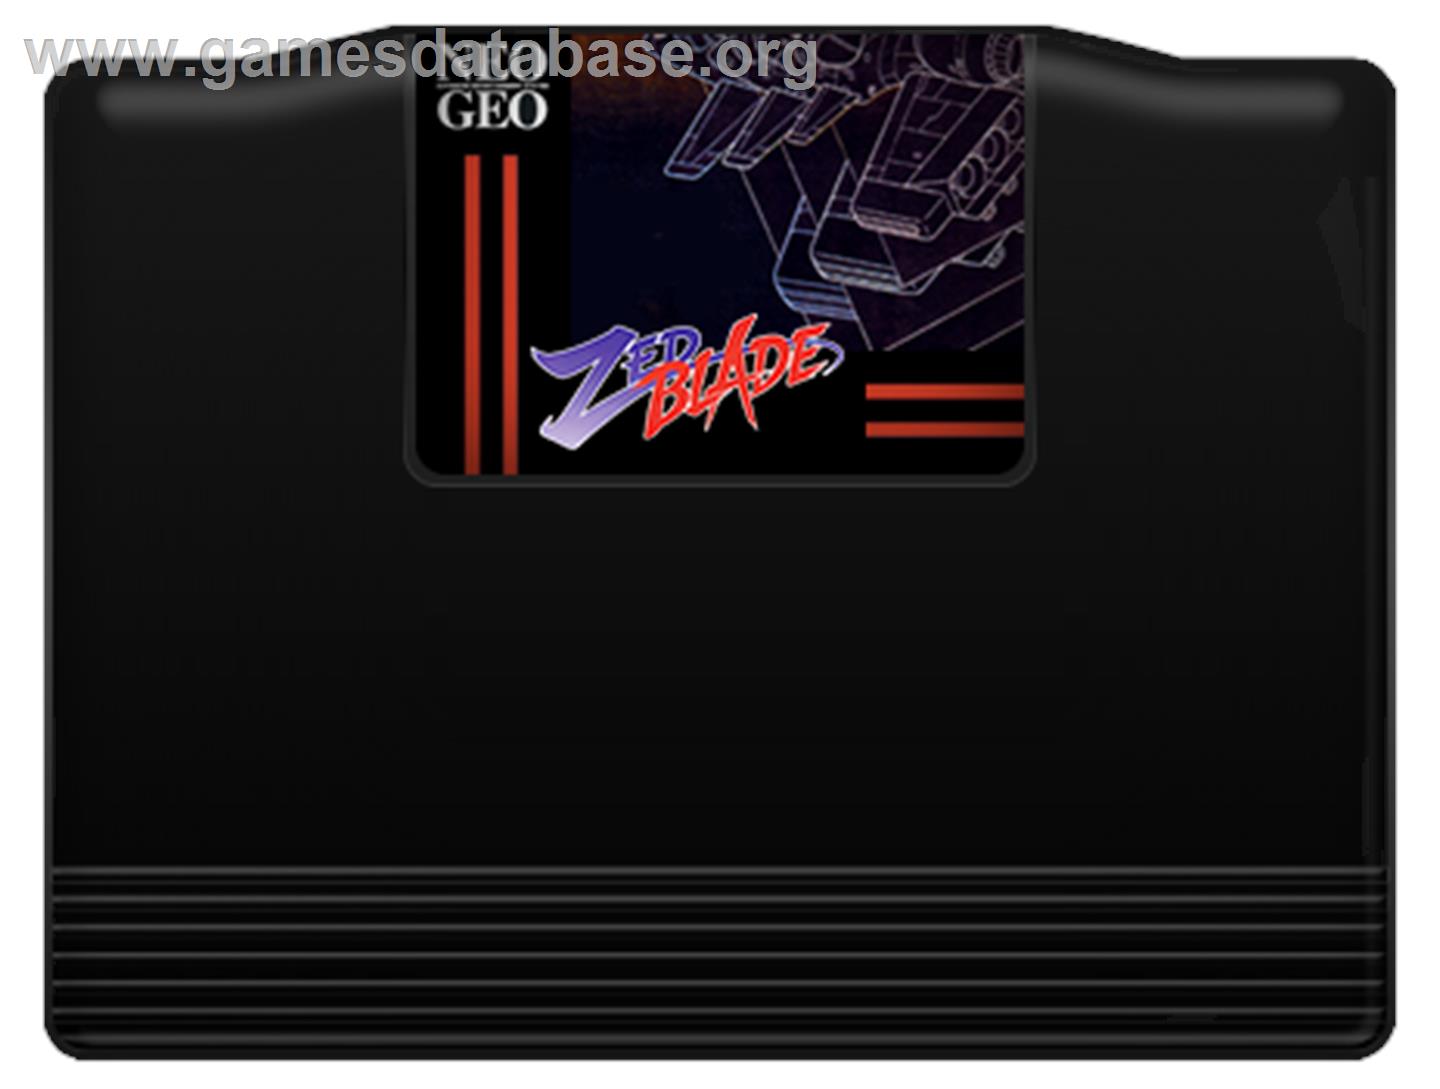 Zed Blade - SNK Neo-Geo AES - Artwork - Cartridge